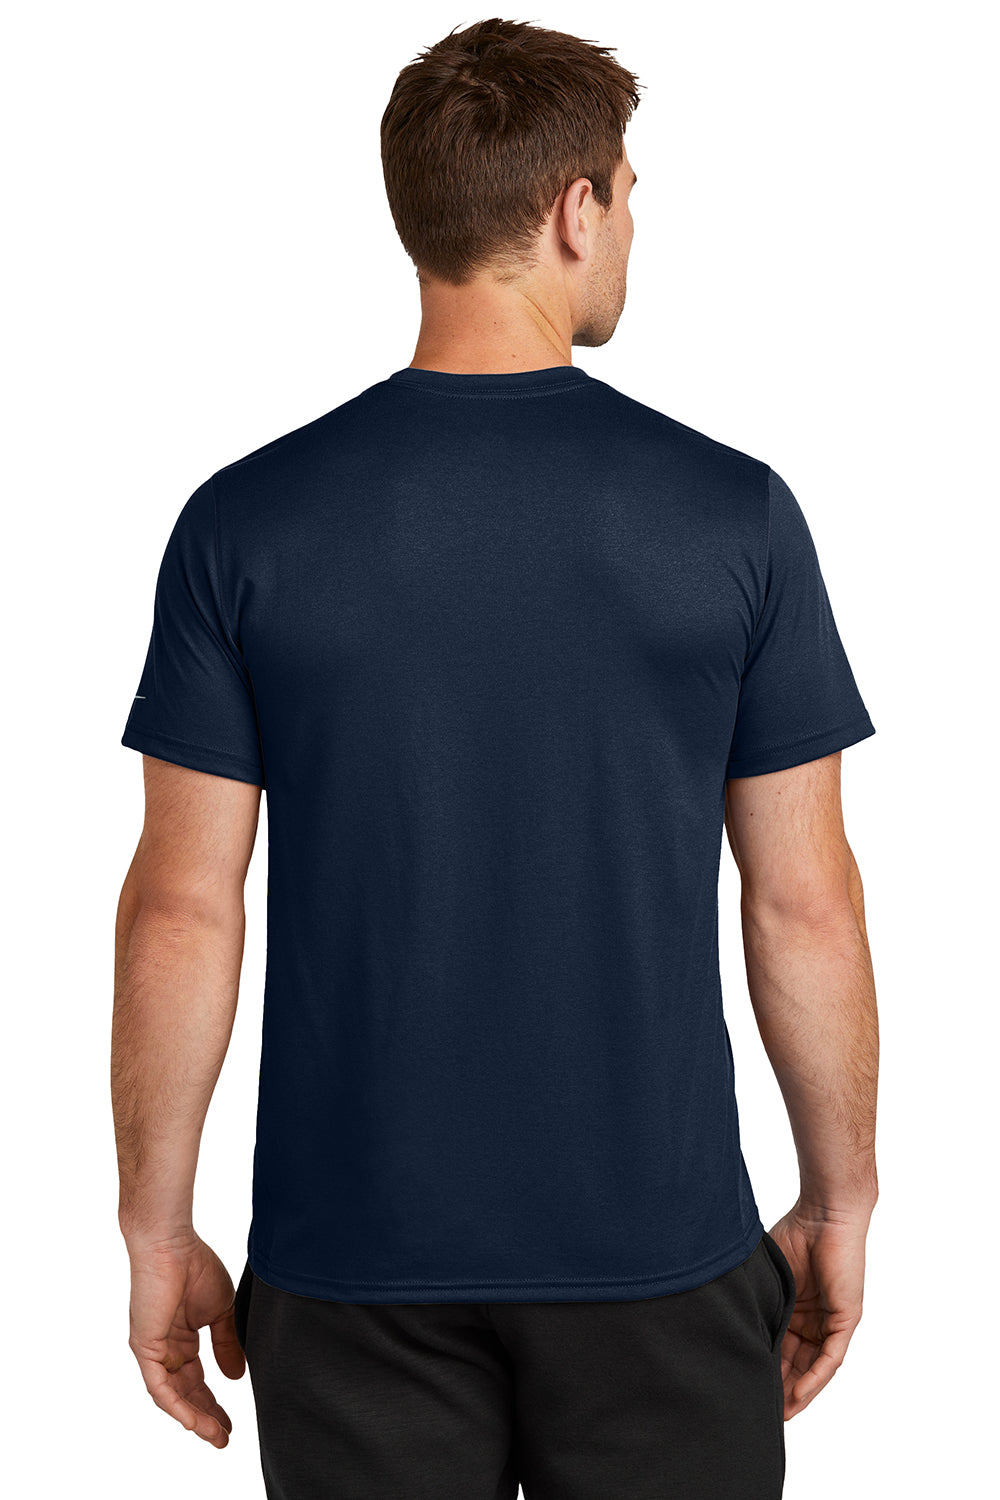 Nike NKDX8730 Mens rLegend Dri-Fit Moisture Wicking Short Sleeve Crewneck T-Shirt College Navy Blue Model Back